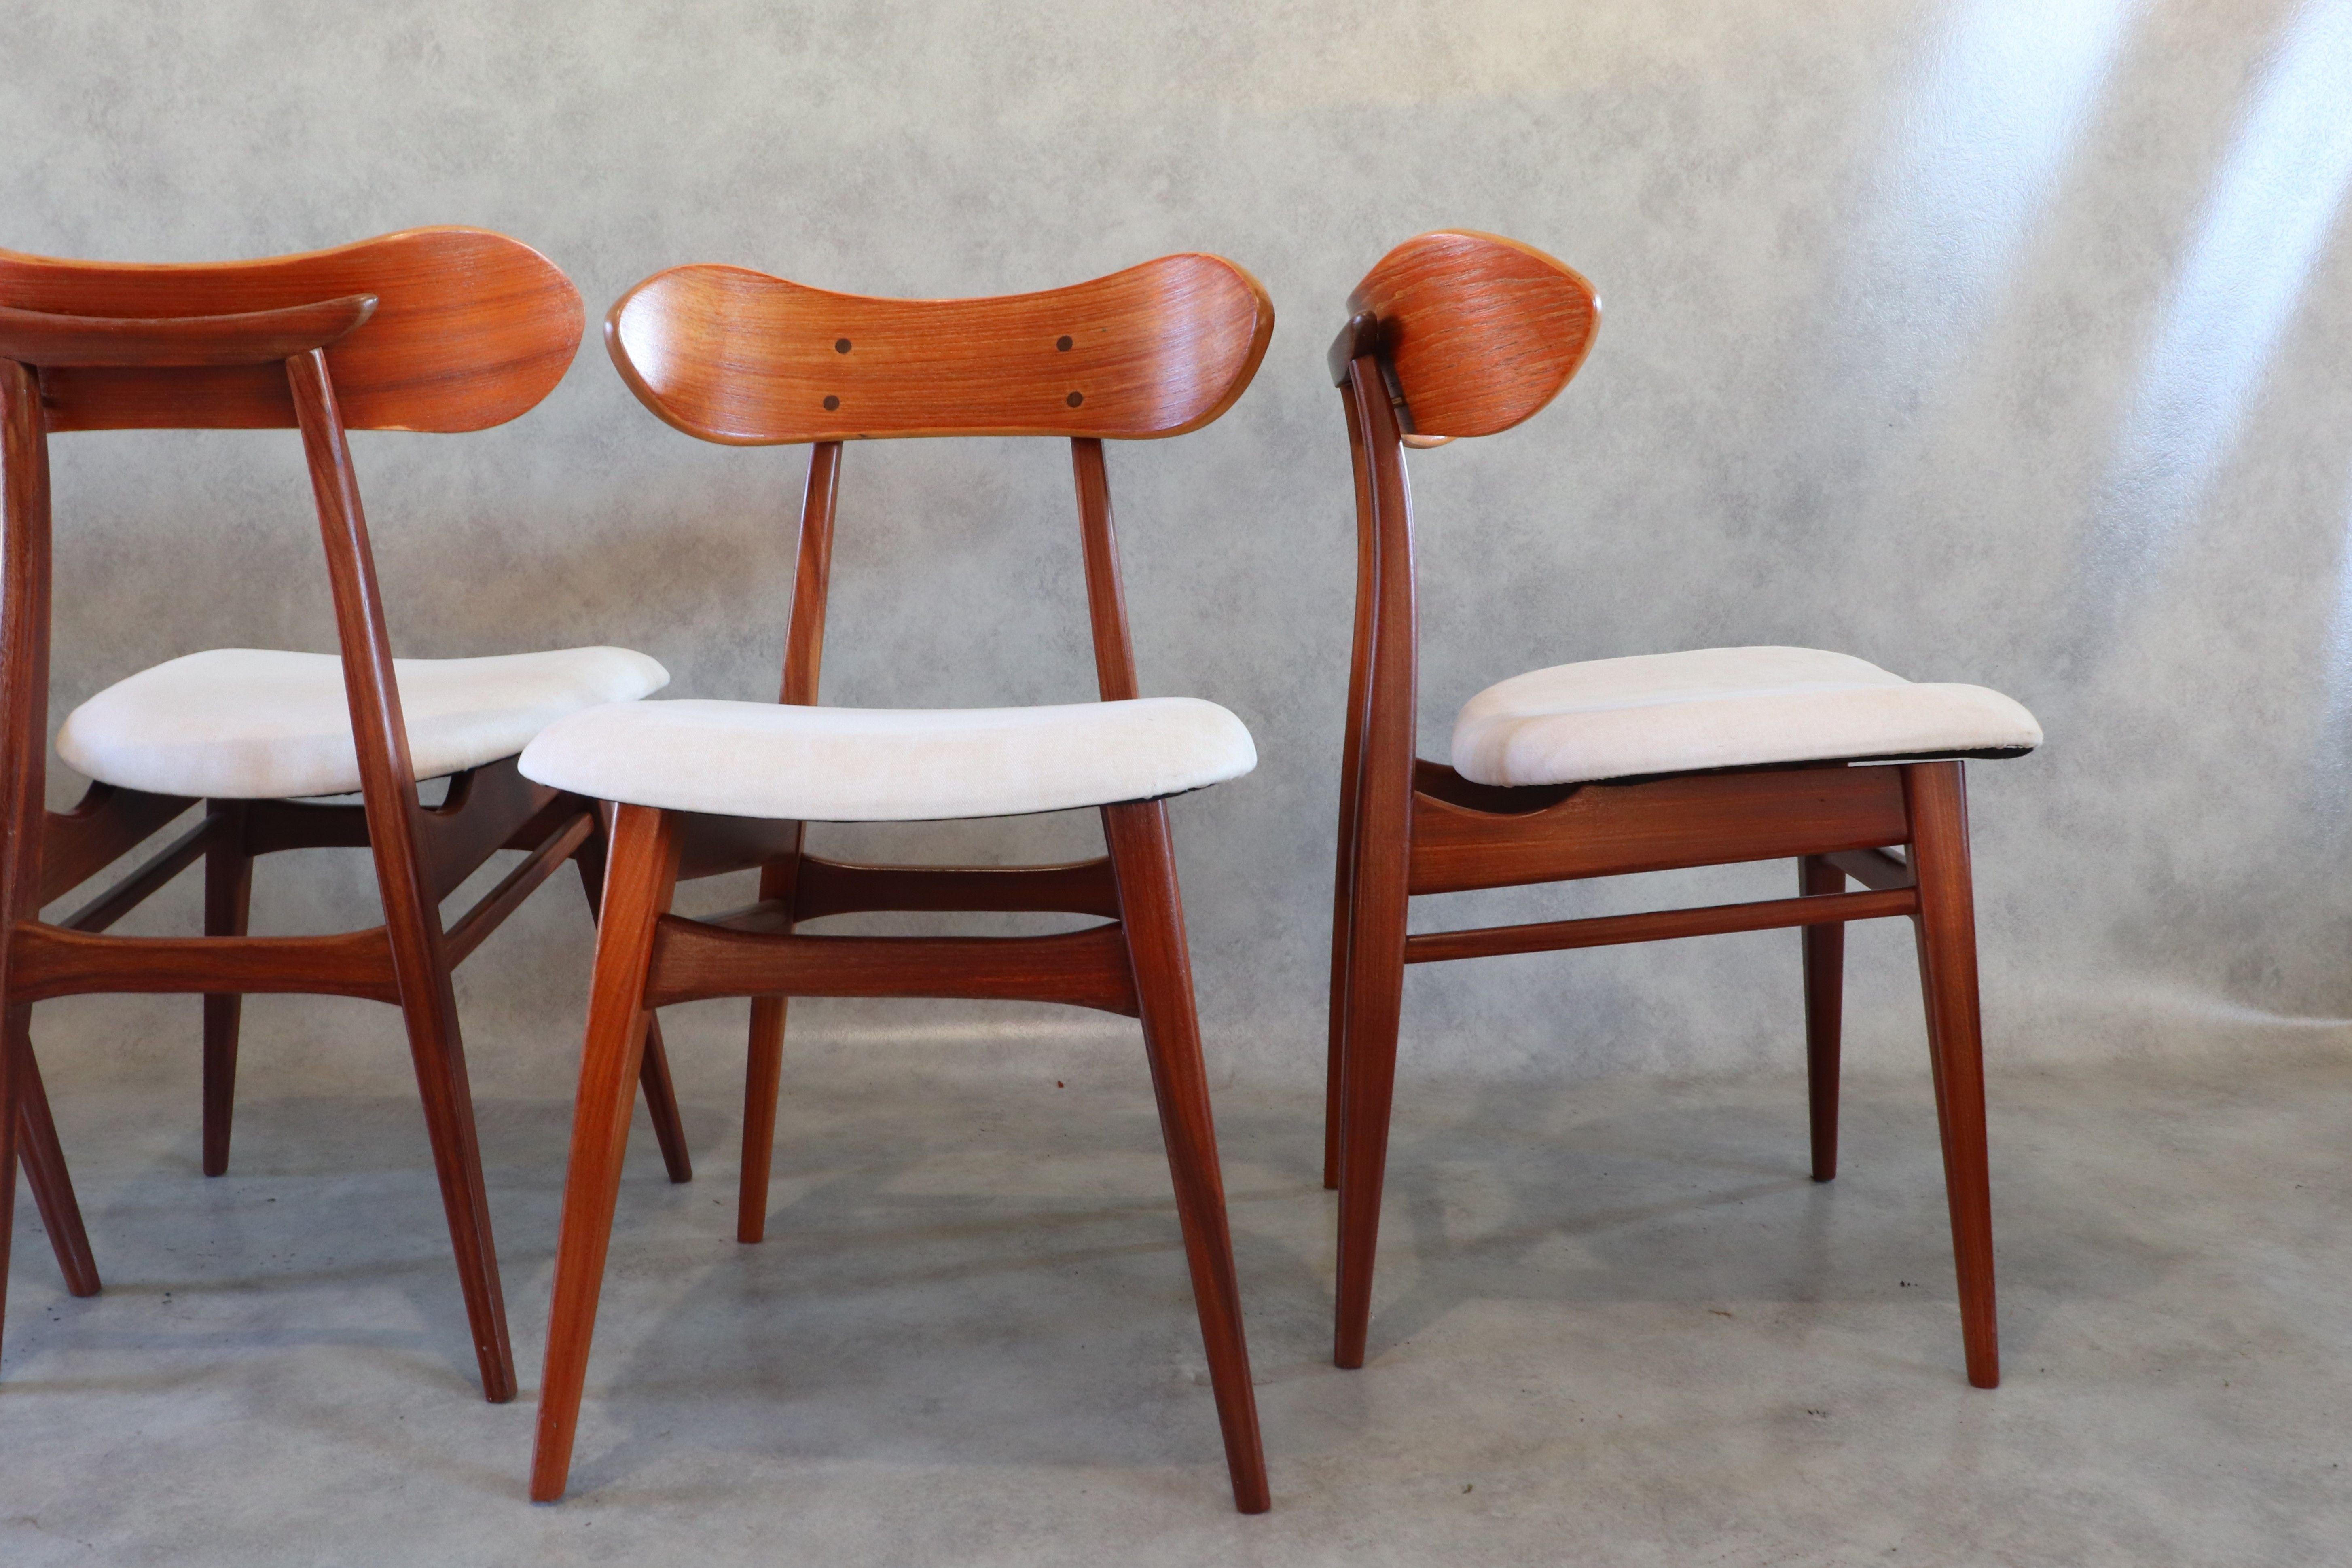 Dutch 20th Century Reupholstered Teak Dining Chairs by Louis Van Teeffelen for Webe